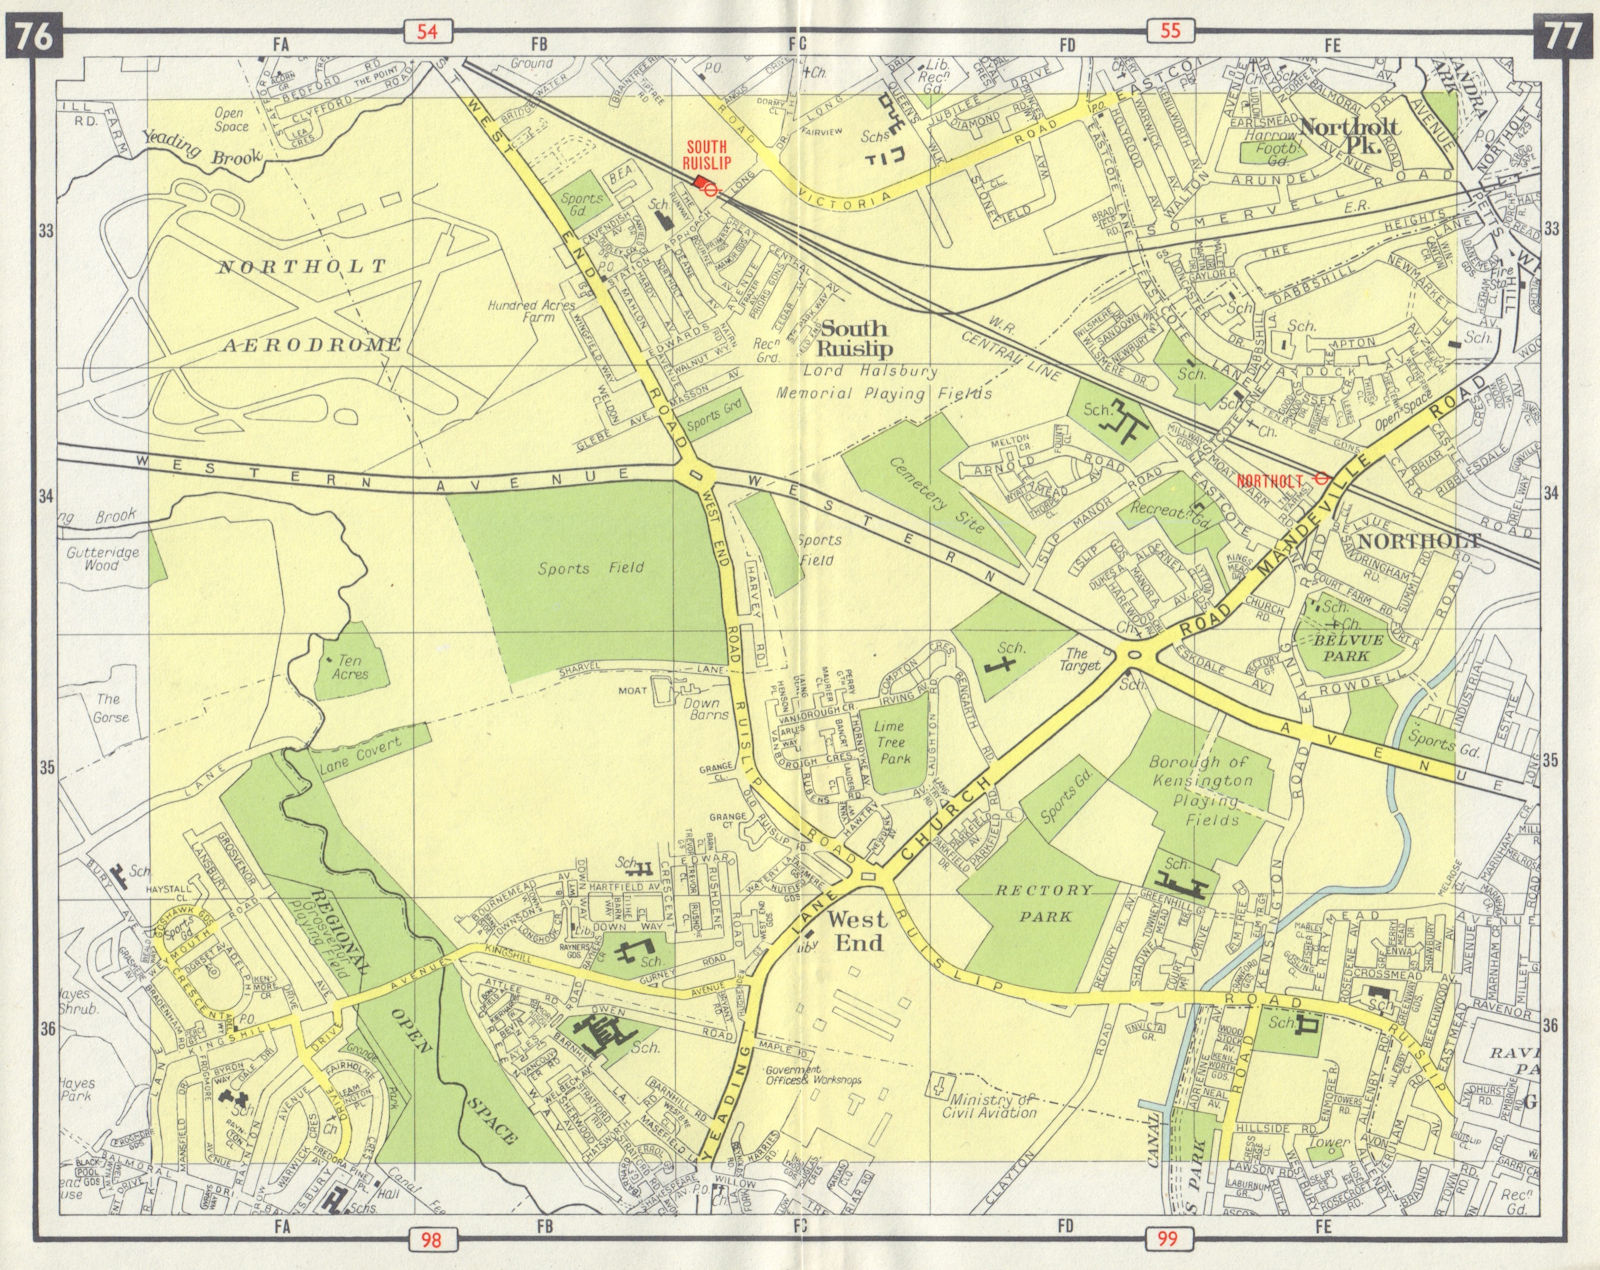 W LONDON Northolt Park Aerodrome South Ruislip West End Greenford 1965 old map